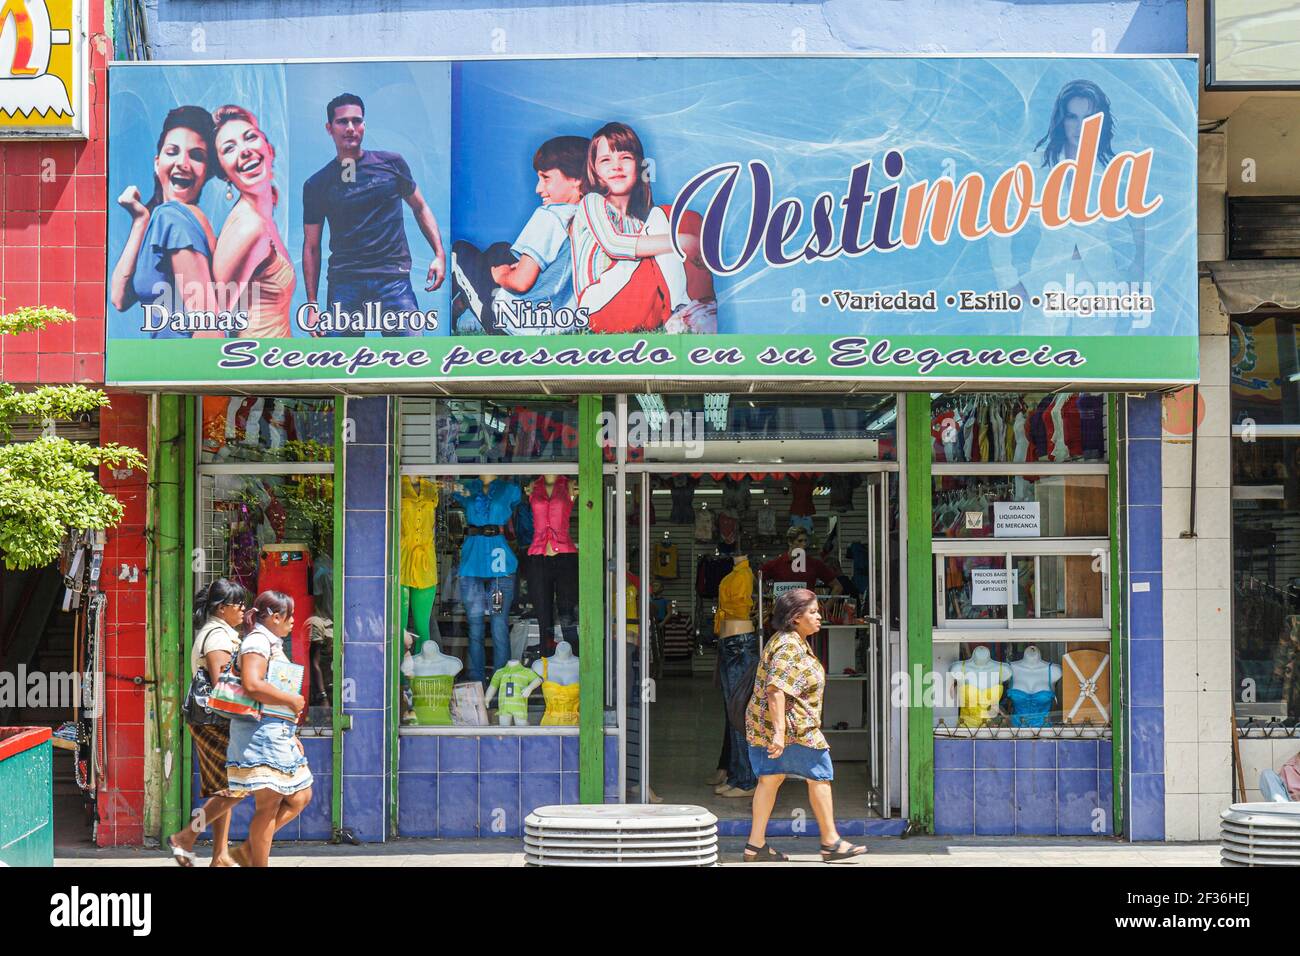 Santo Domingo Dominican Republic,Avenida Duarte garment district,apparel fashion clothing store business front entrance,shopping Spanish language Hisp Stock Photo